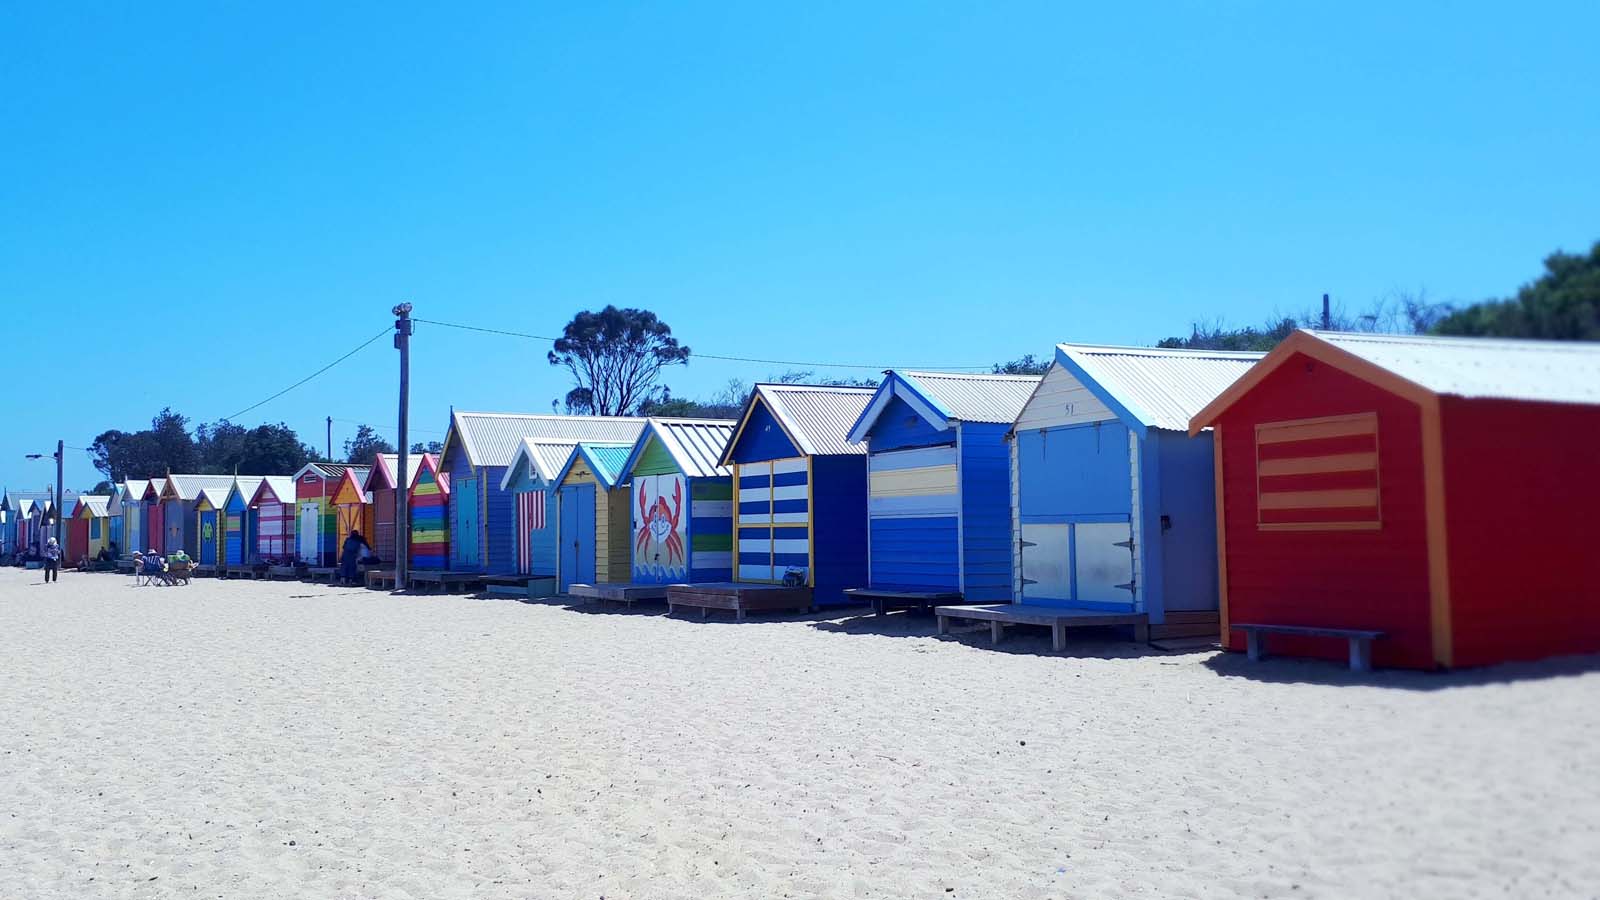 brighton beach, brighton beach melbourne, brighton beach boxes, brighton bathing boxes, beaches in melbourne, brighton beach huts